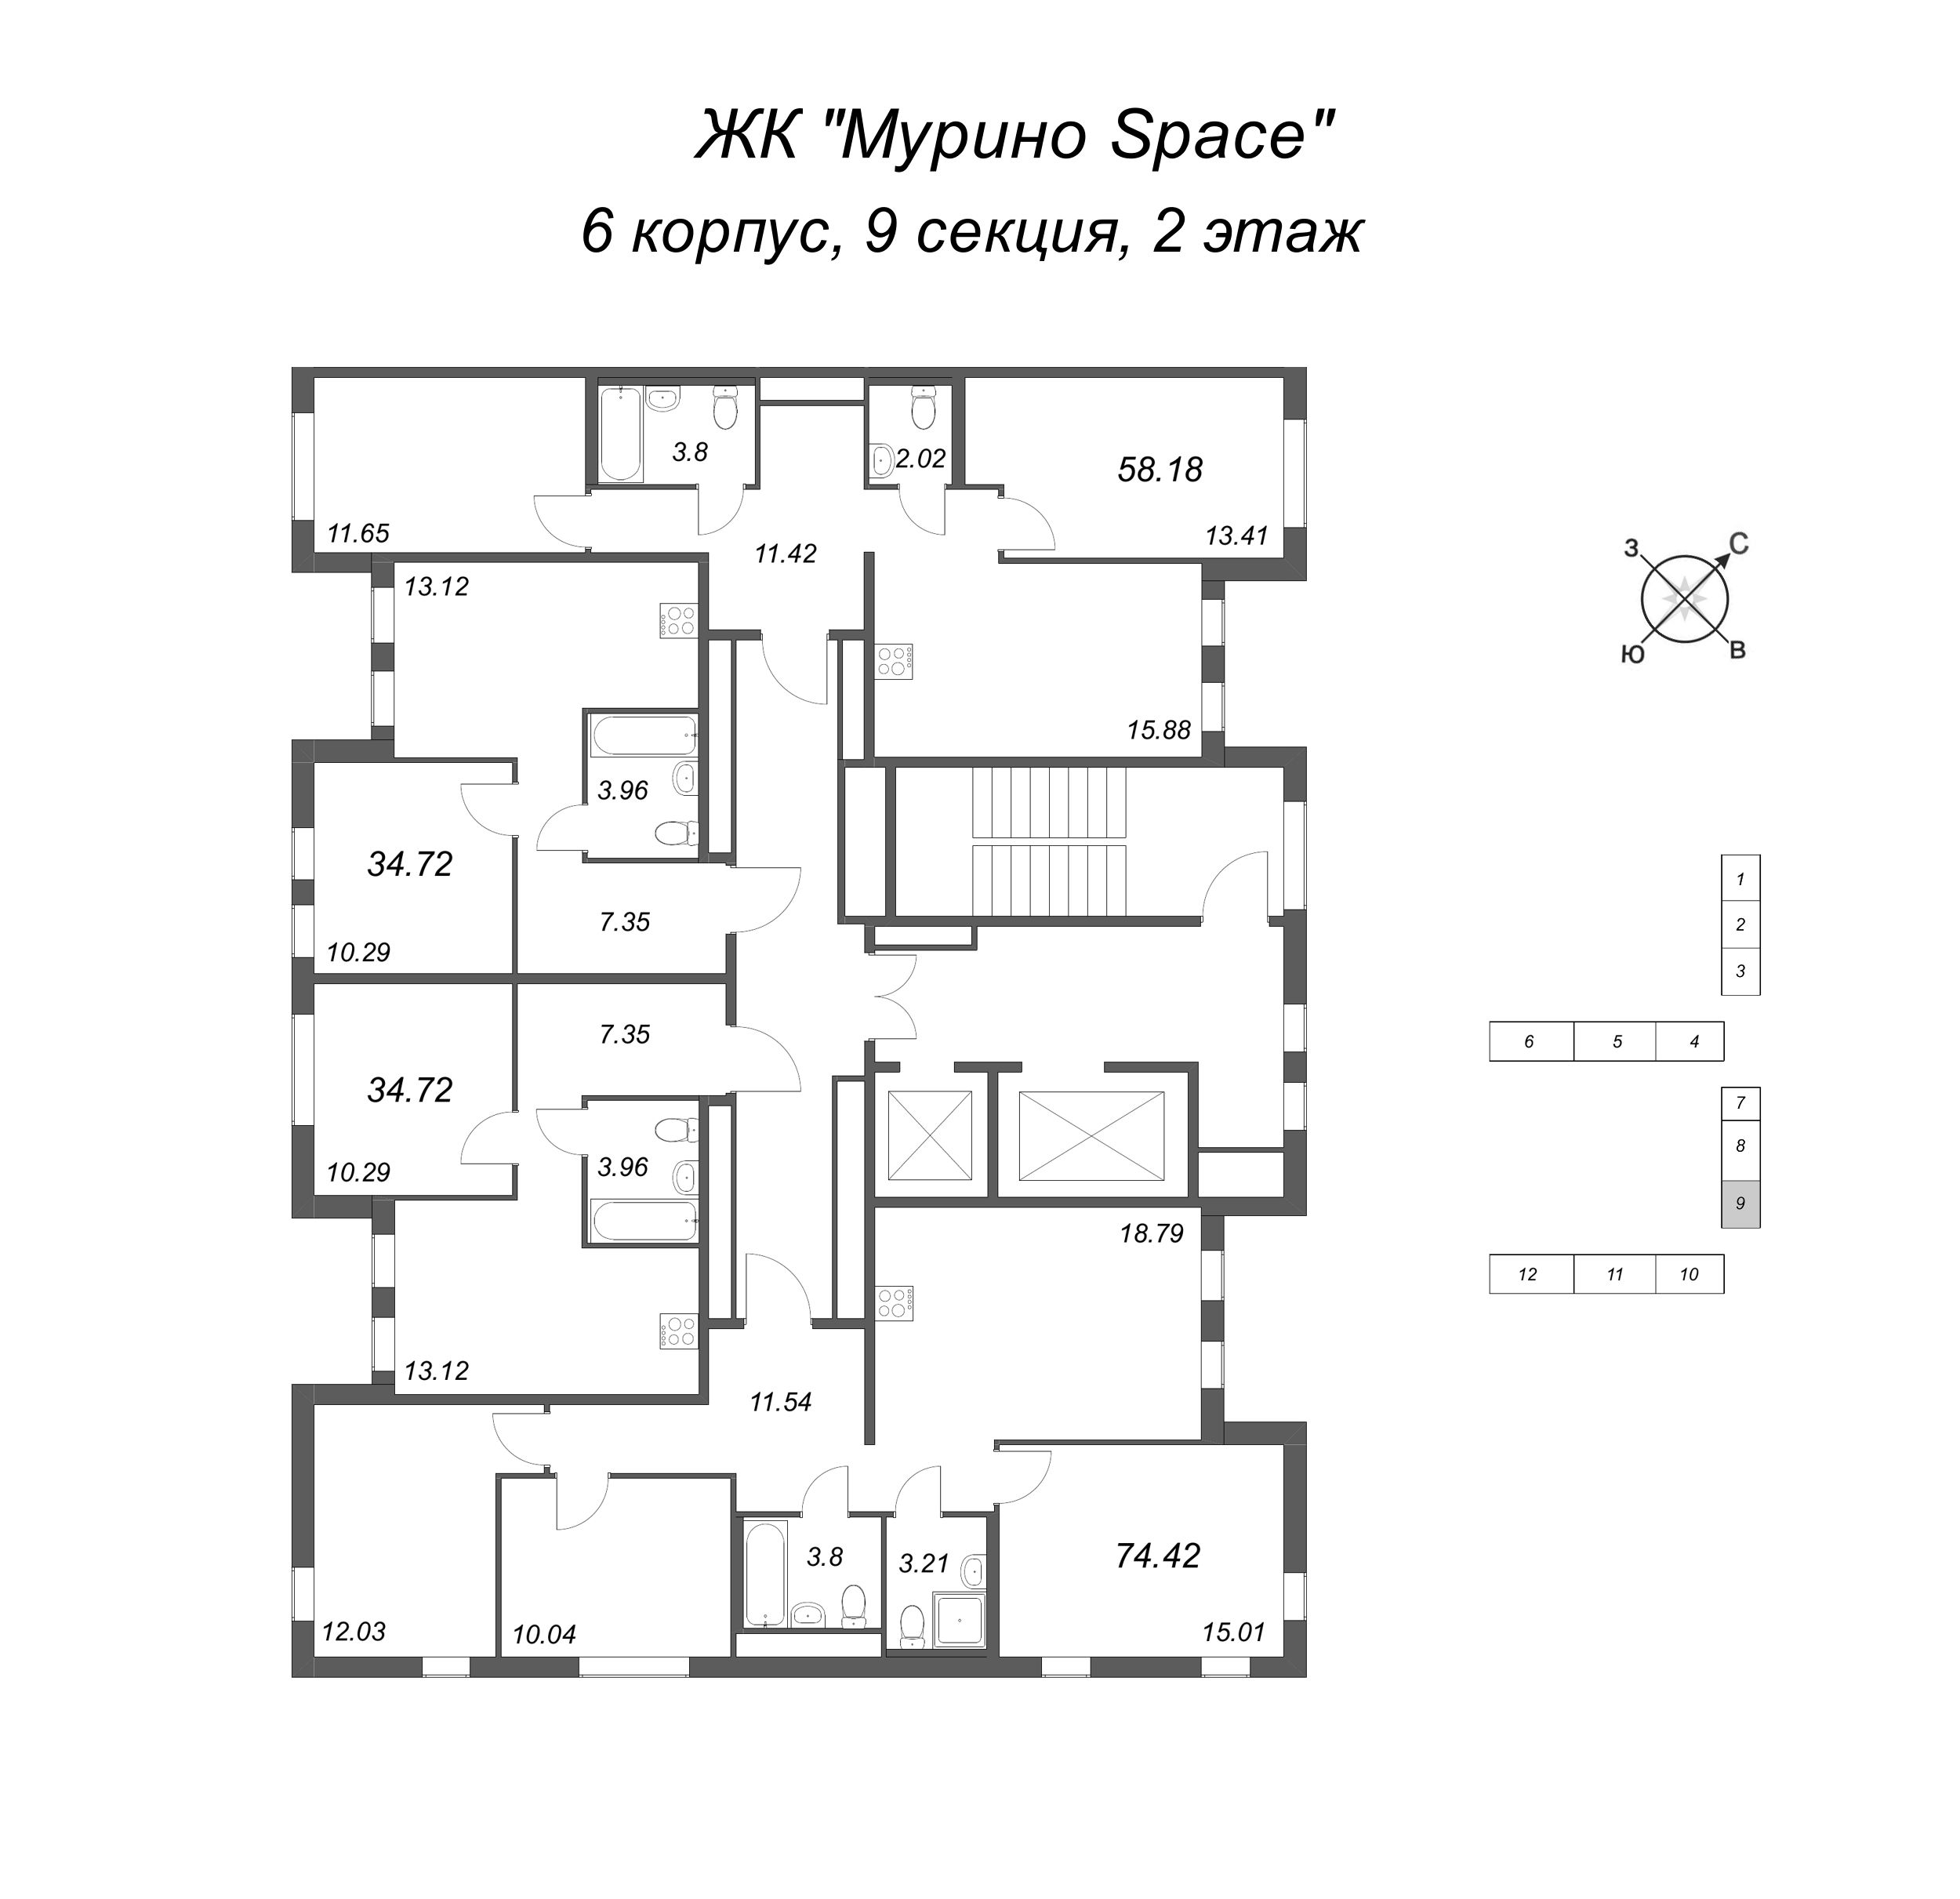 3-комнатная (Евро) квартира, 58.18 м² - планировка этажа